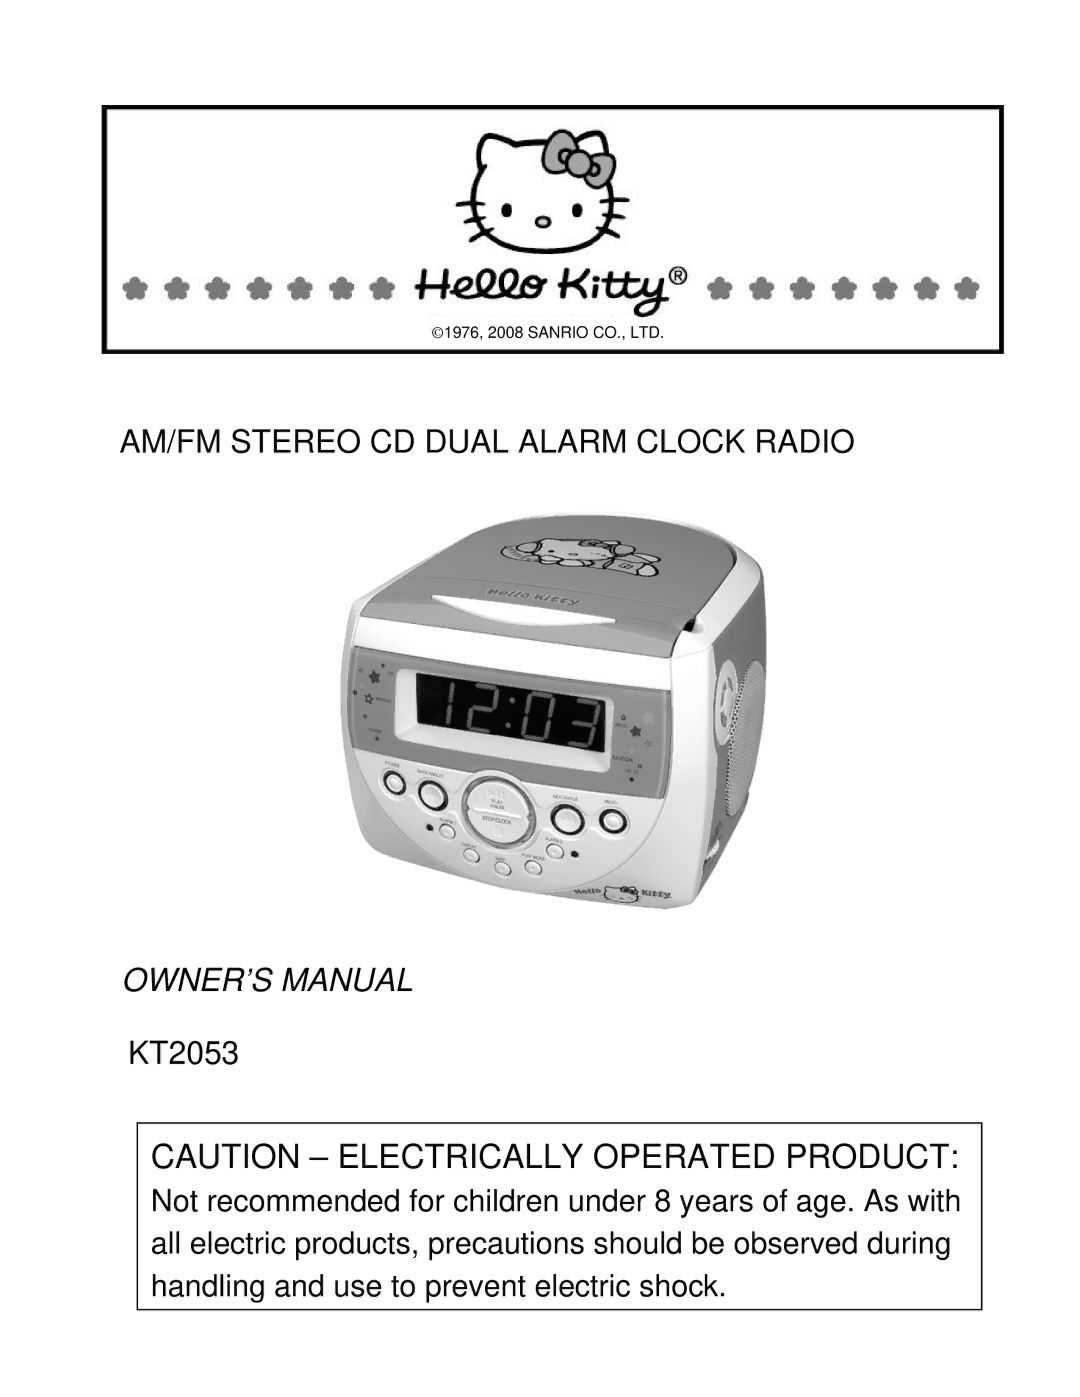 Spectra KT2053 owner manual AM/FM Stereo CD Dual Alarm Clock Radio 